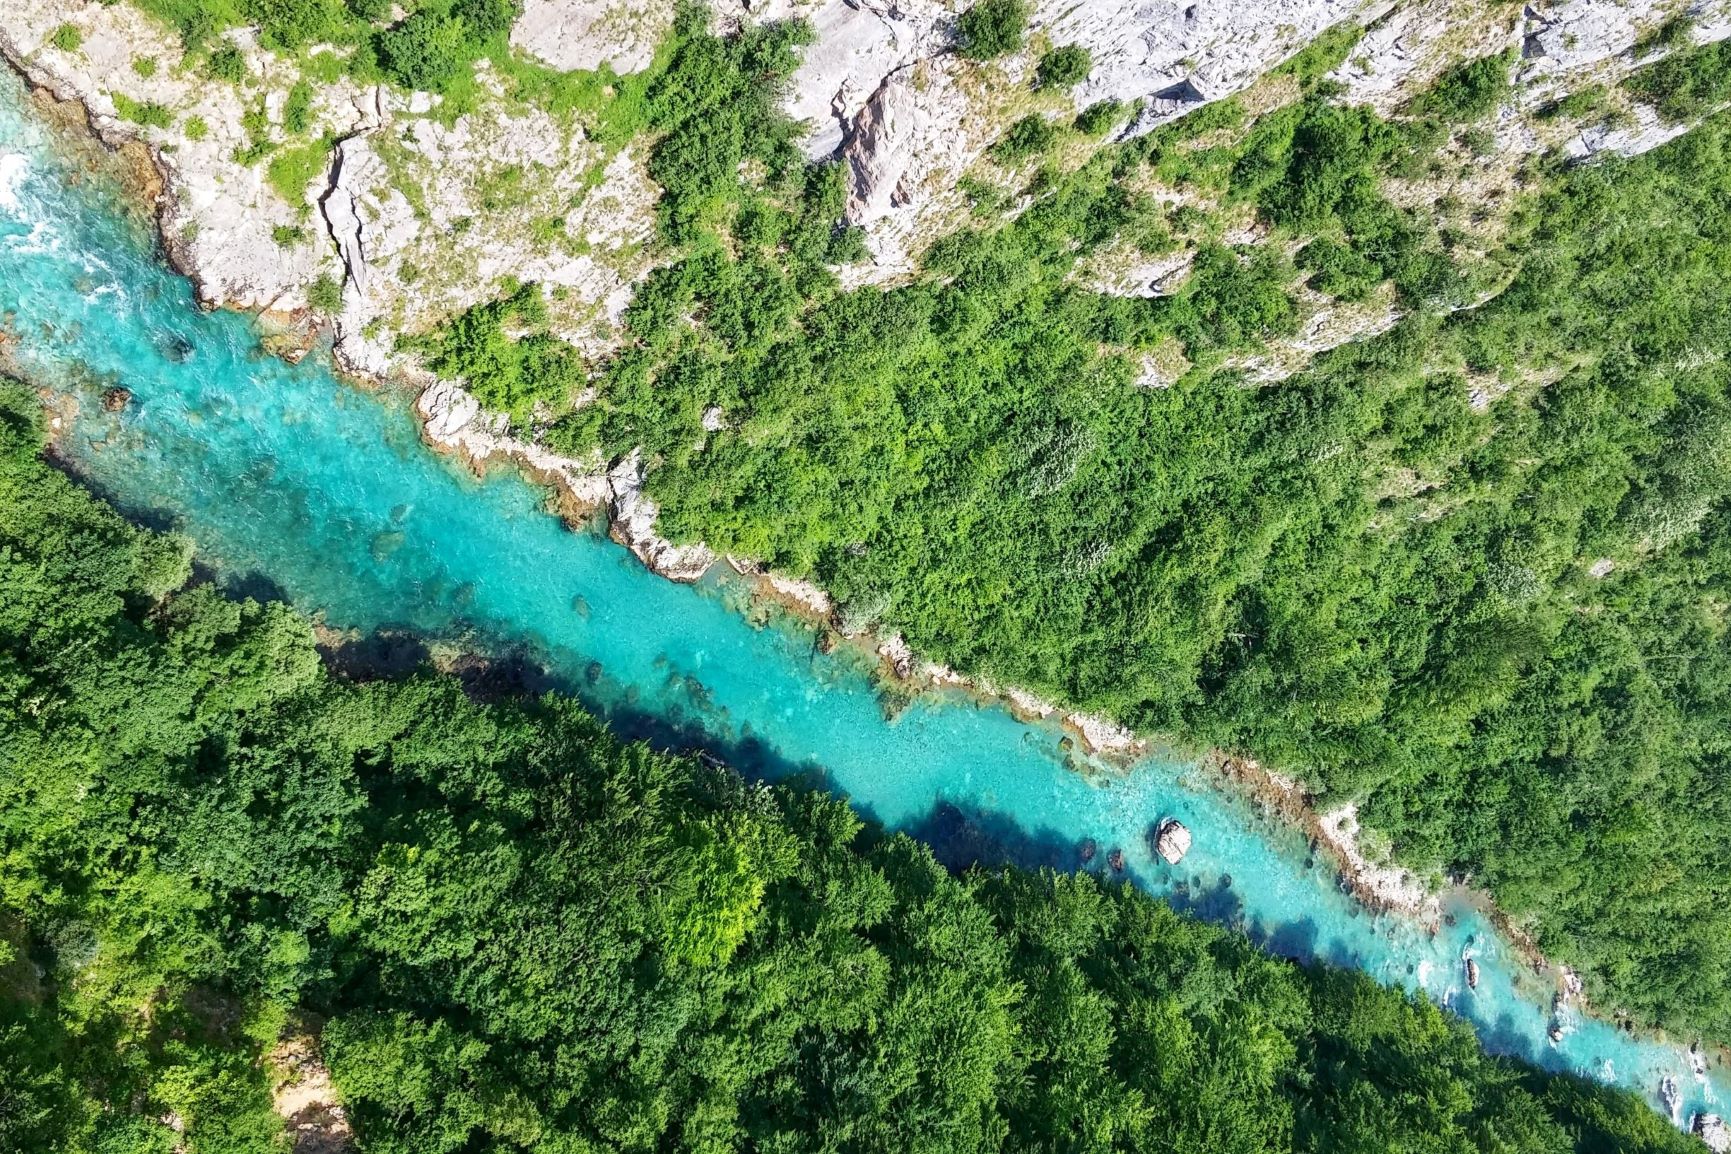 KNMtravel DMC, KNMexclusive, Montenegro, Tara river, outdoor activities, rafting, bbq